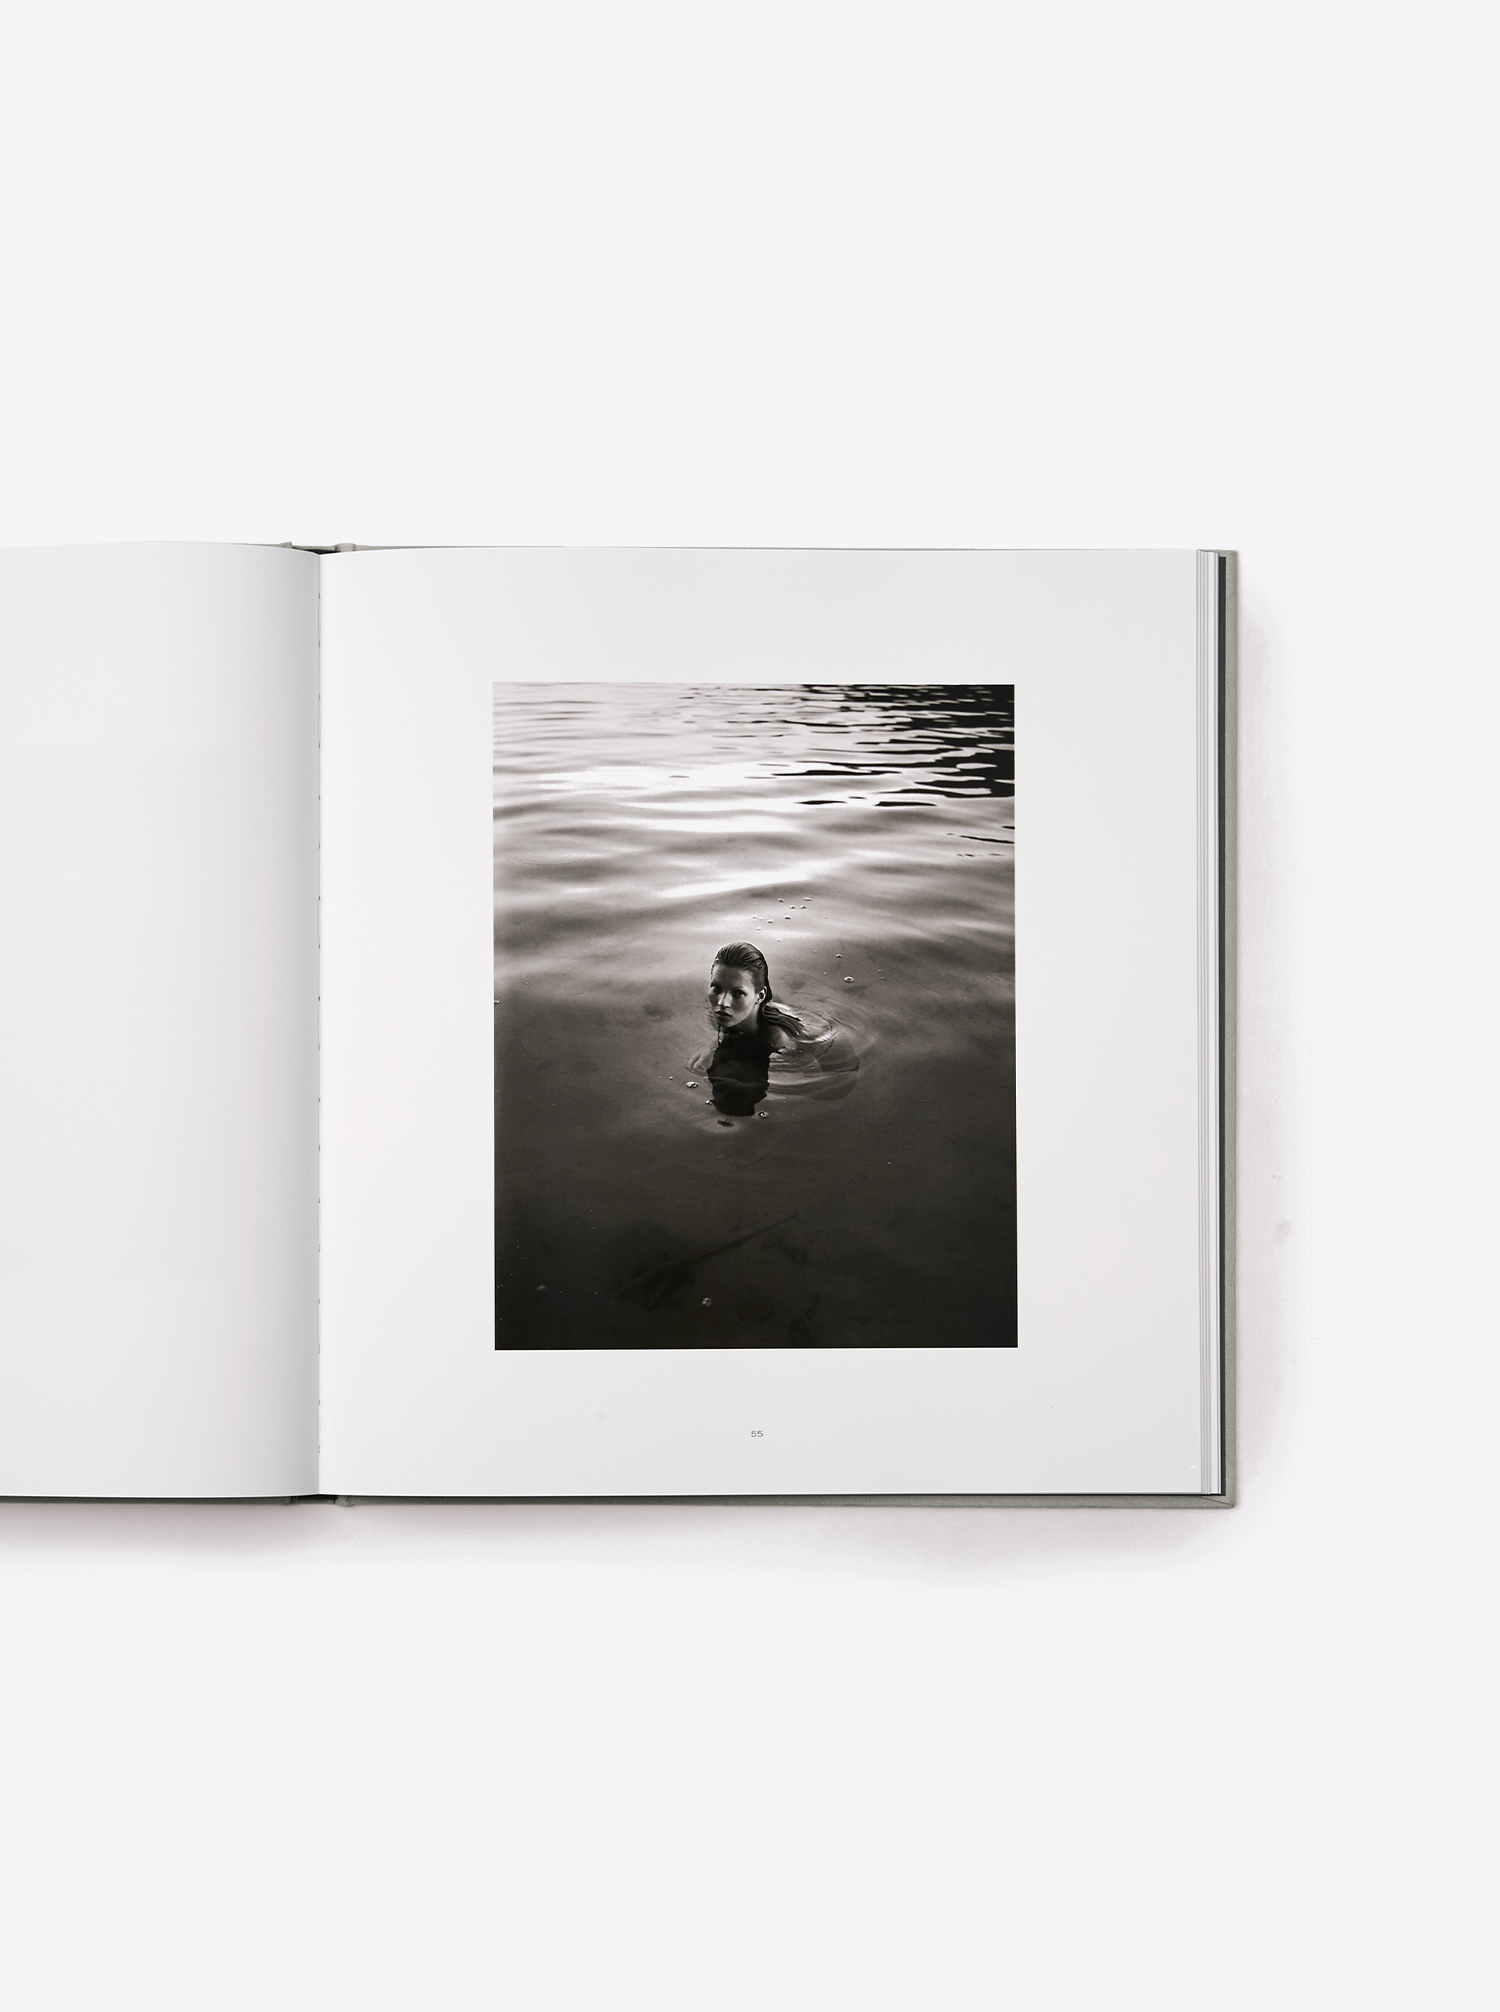 Buch „Kate“ (Kate Moss) von Mario Sorrenti Limited Edition #2